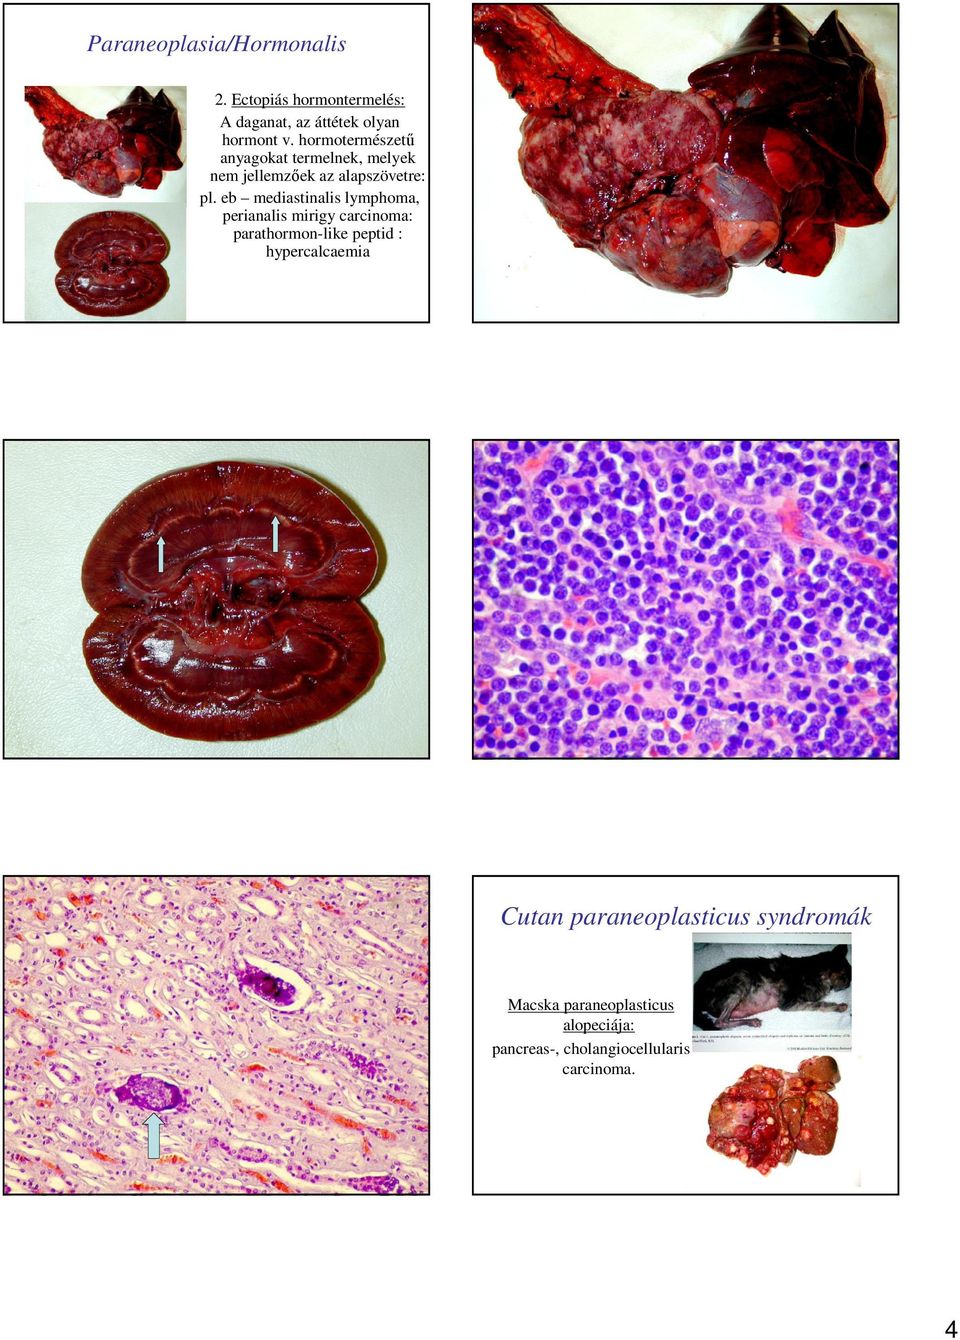 eb mediastinalis lymphoma, perianalis mirigy carcinoma: parathormon-like peptid :